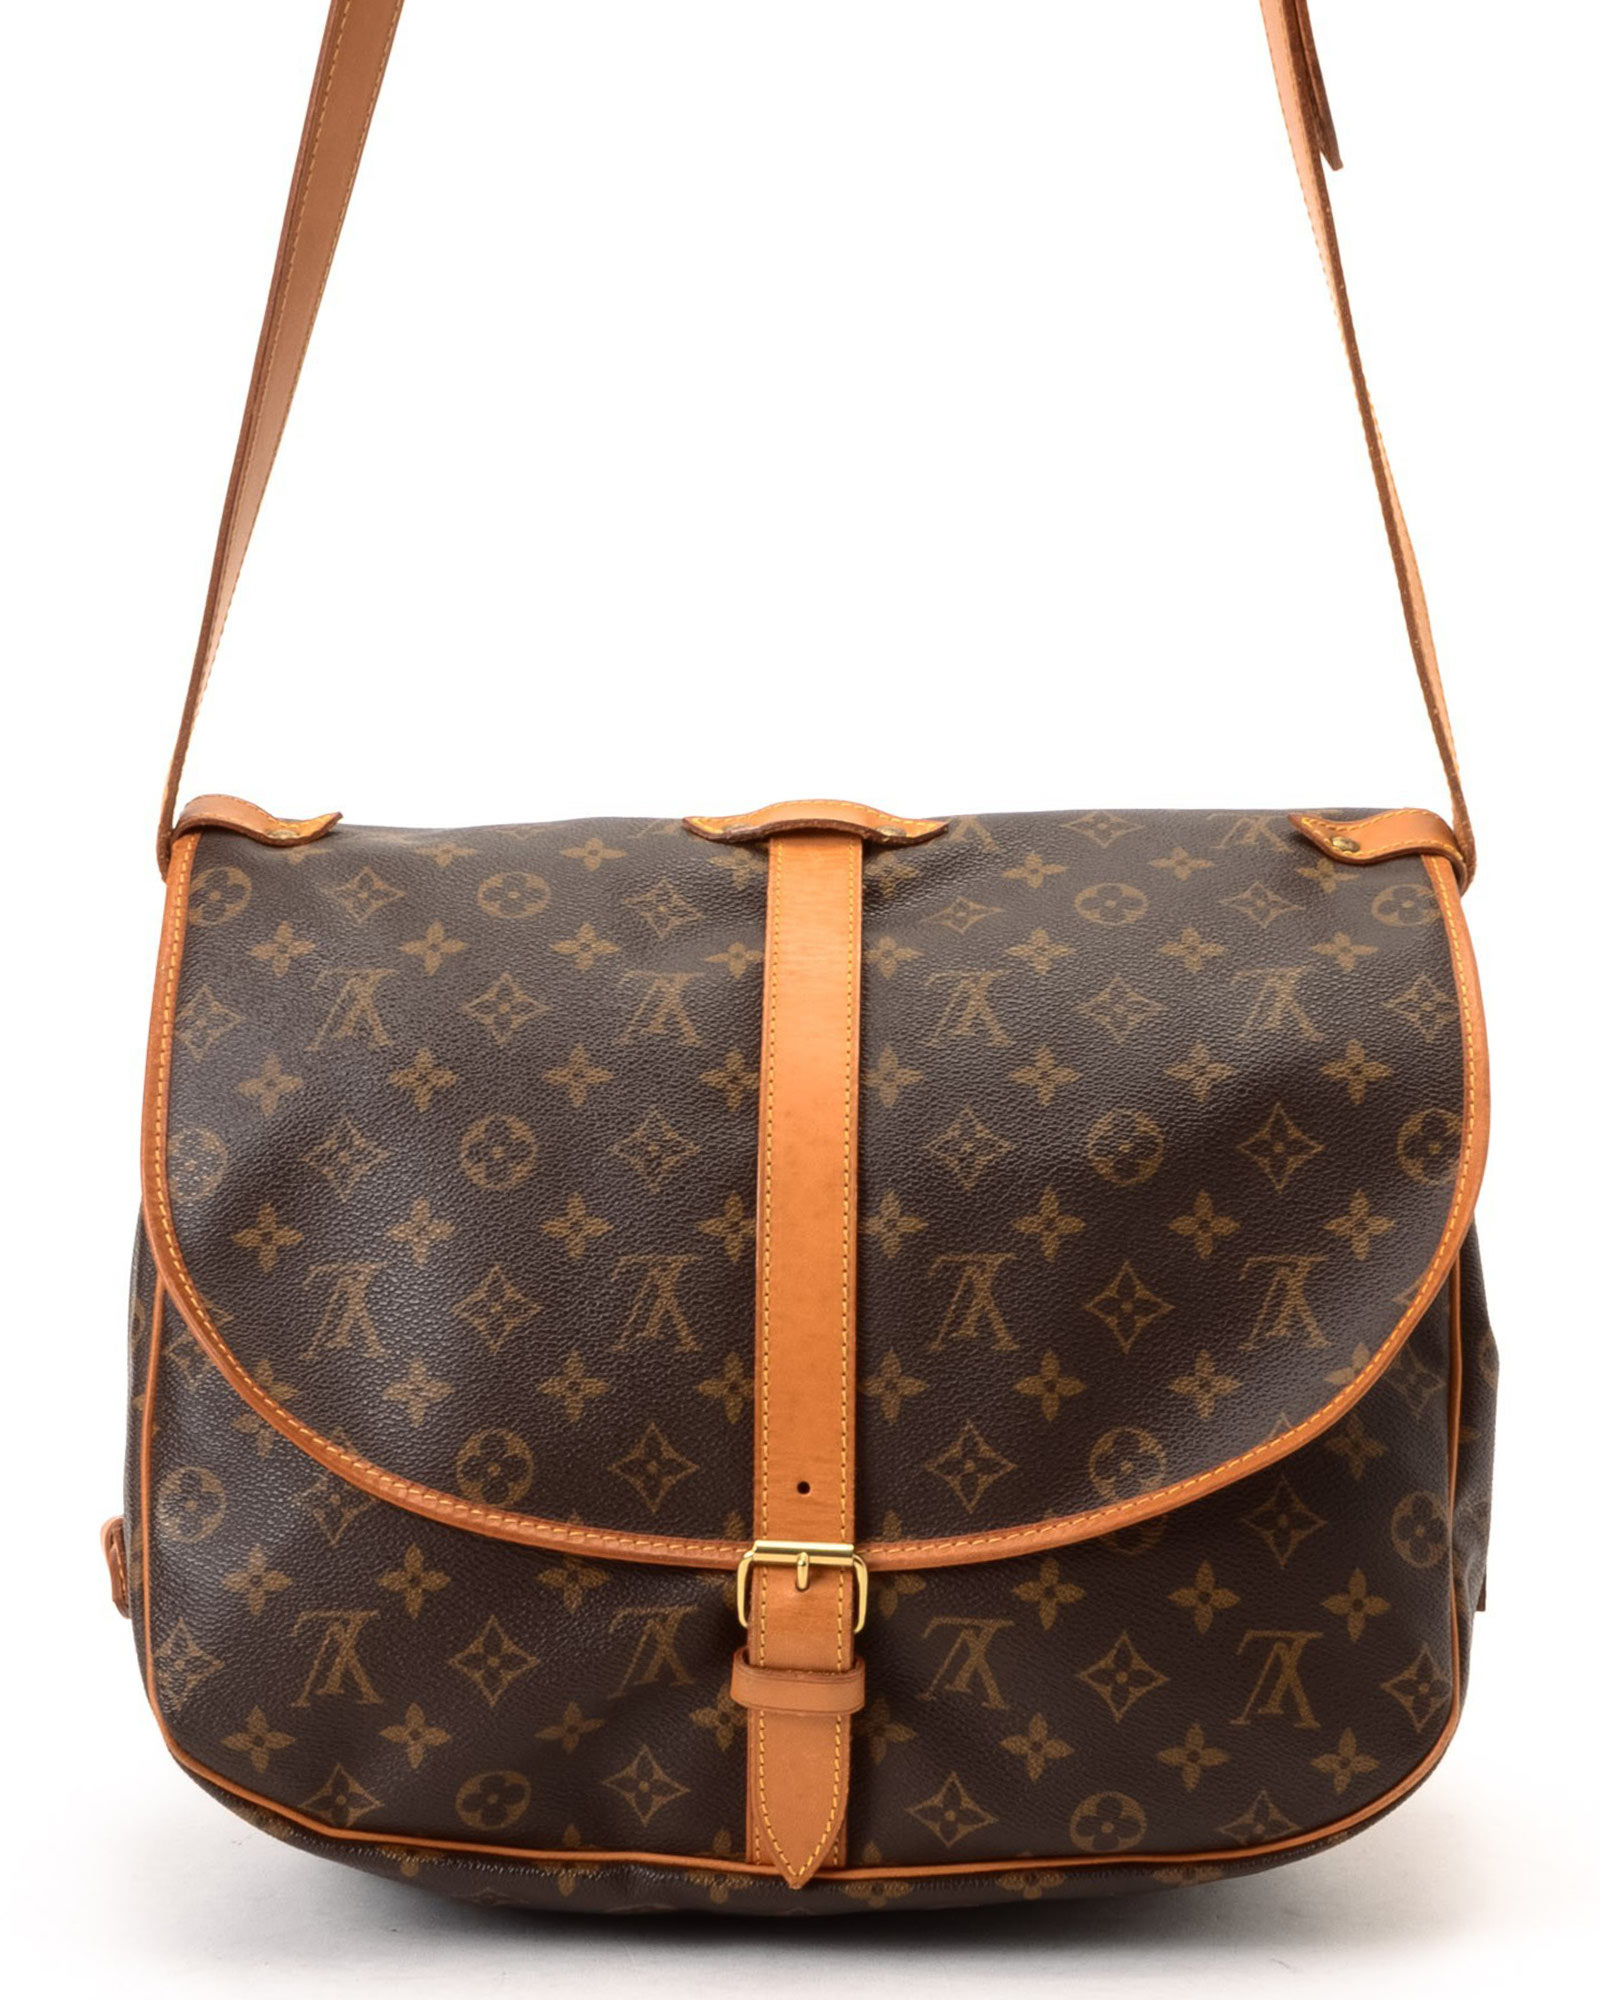 Lyst - Louis Vuitton Crossbody Bag - Vintage in Brown